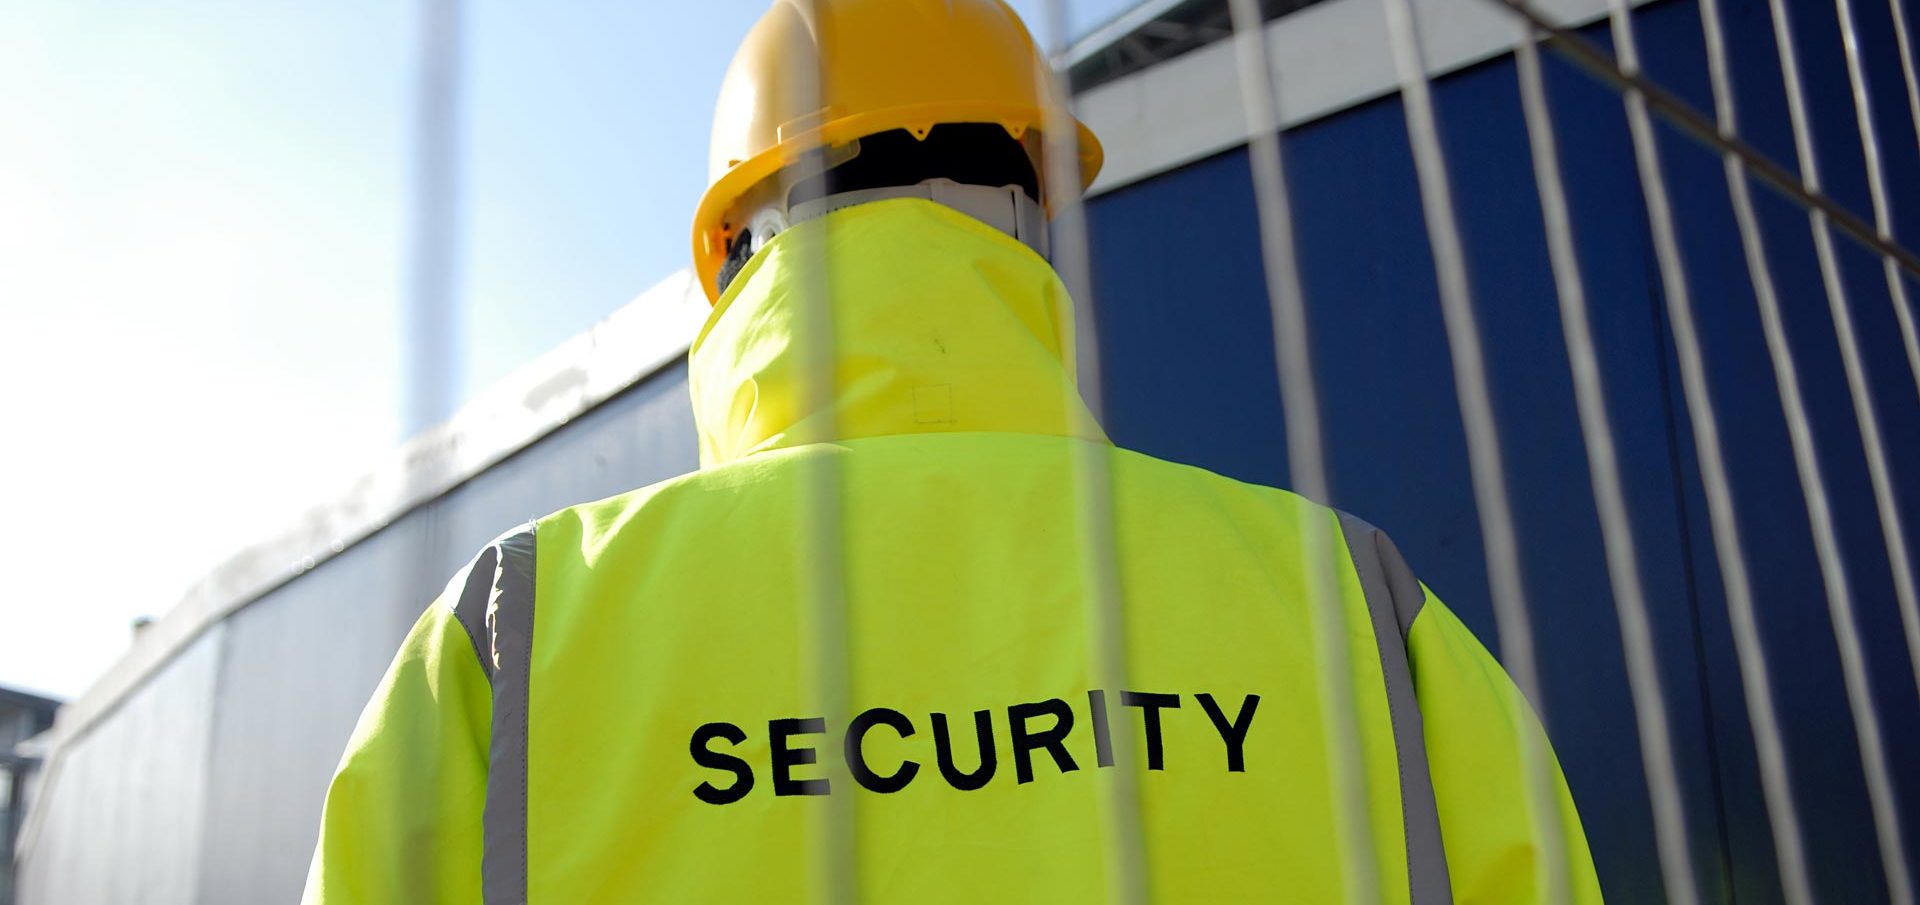 A security worker wearing a helmet